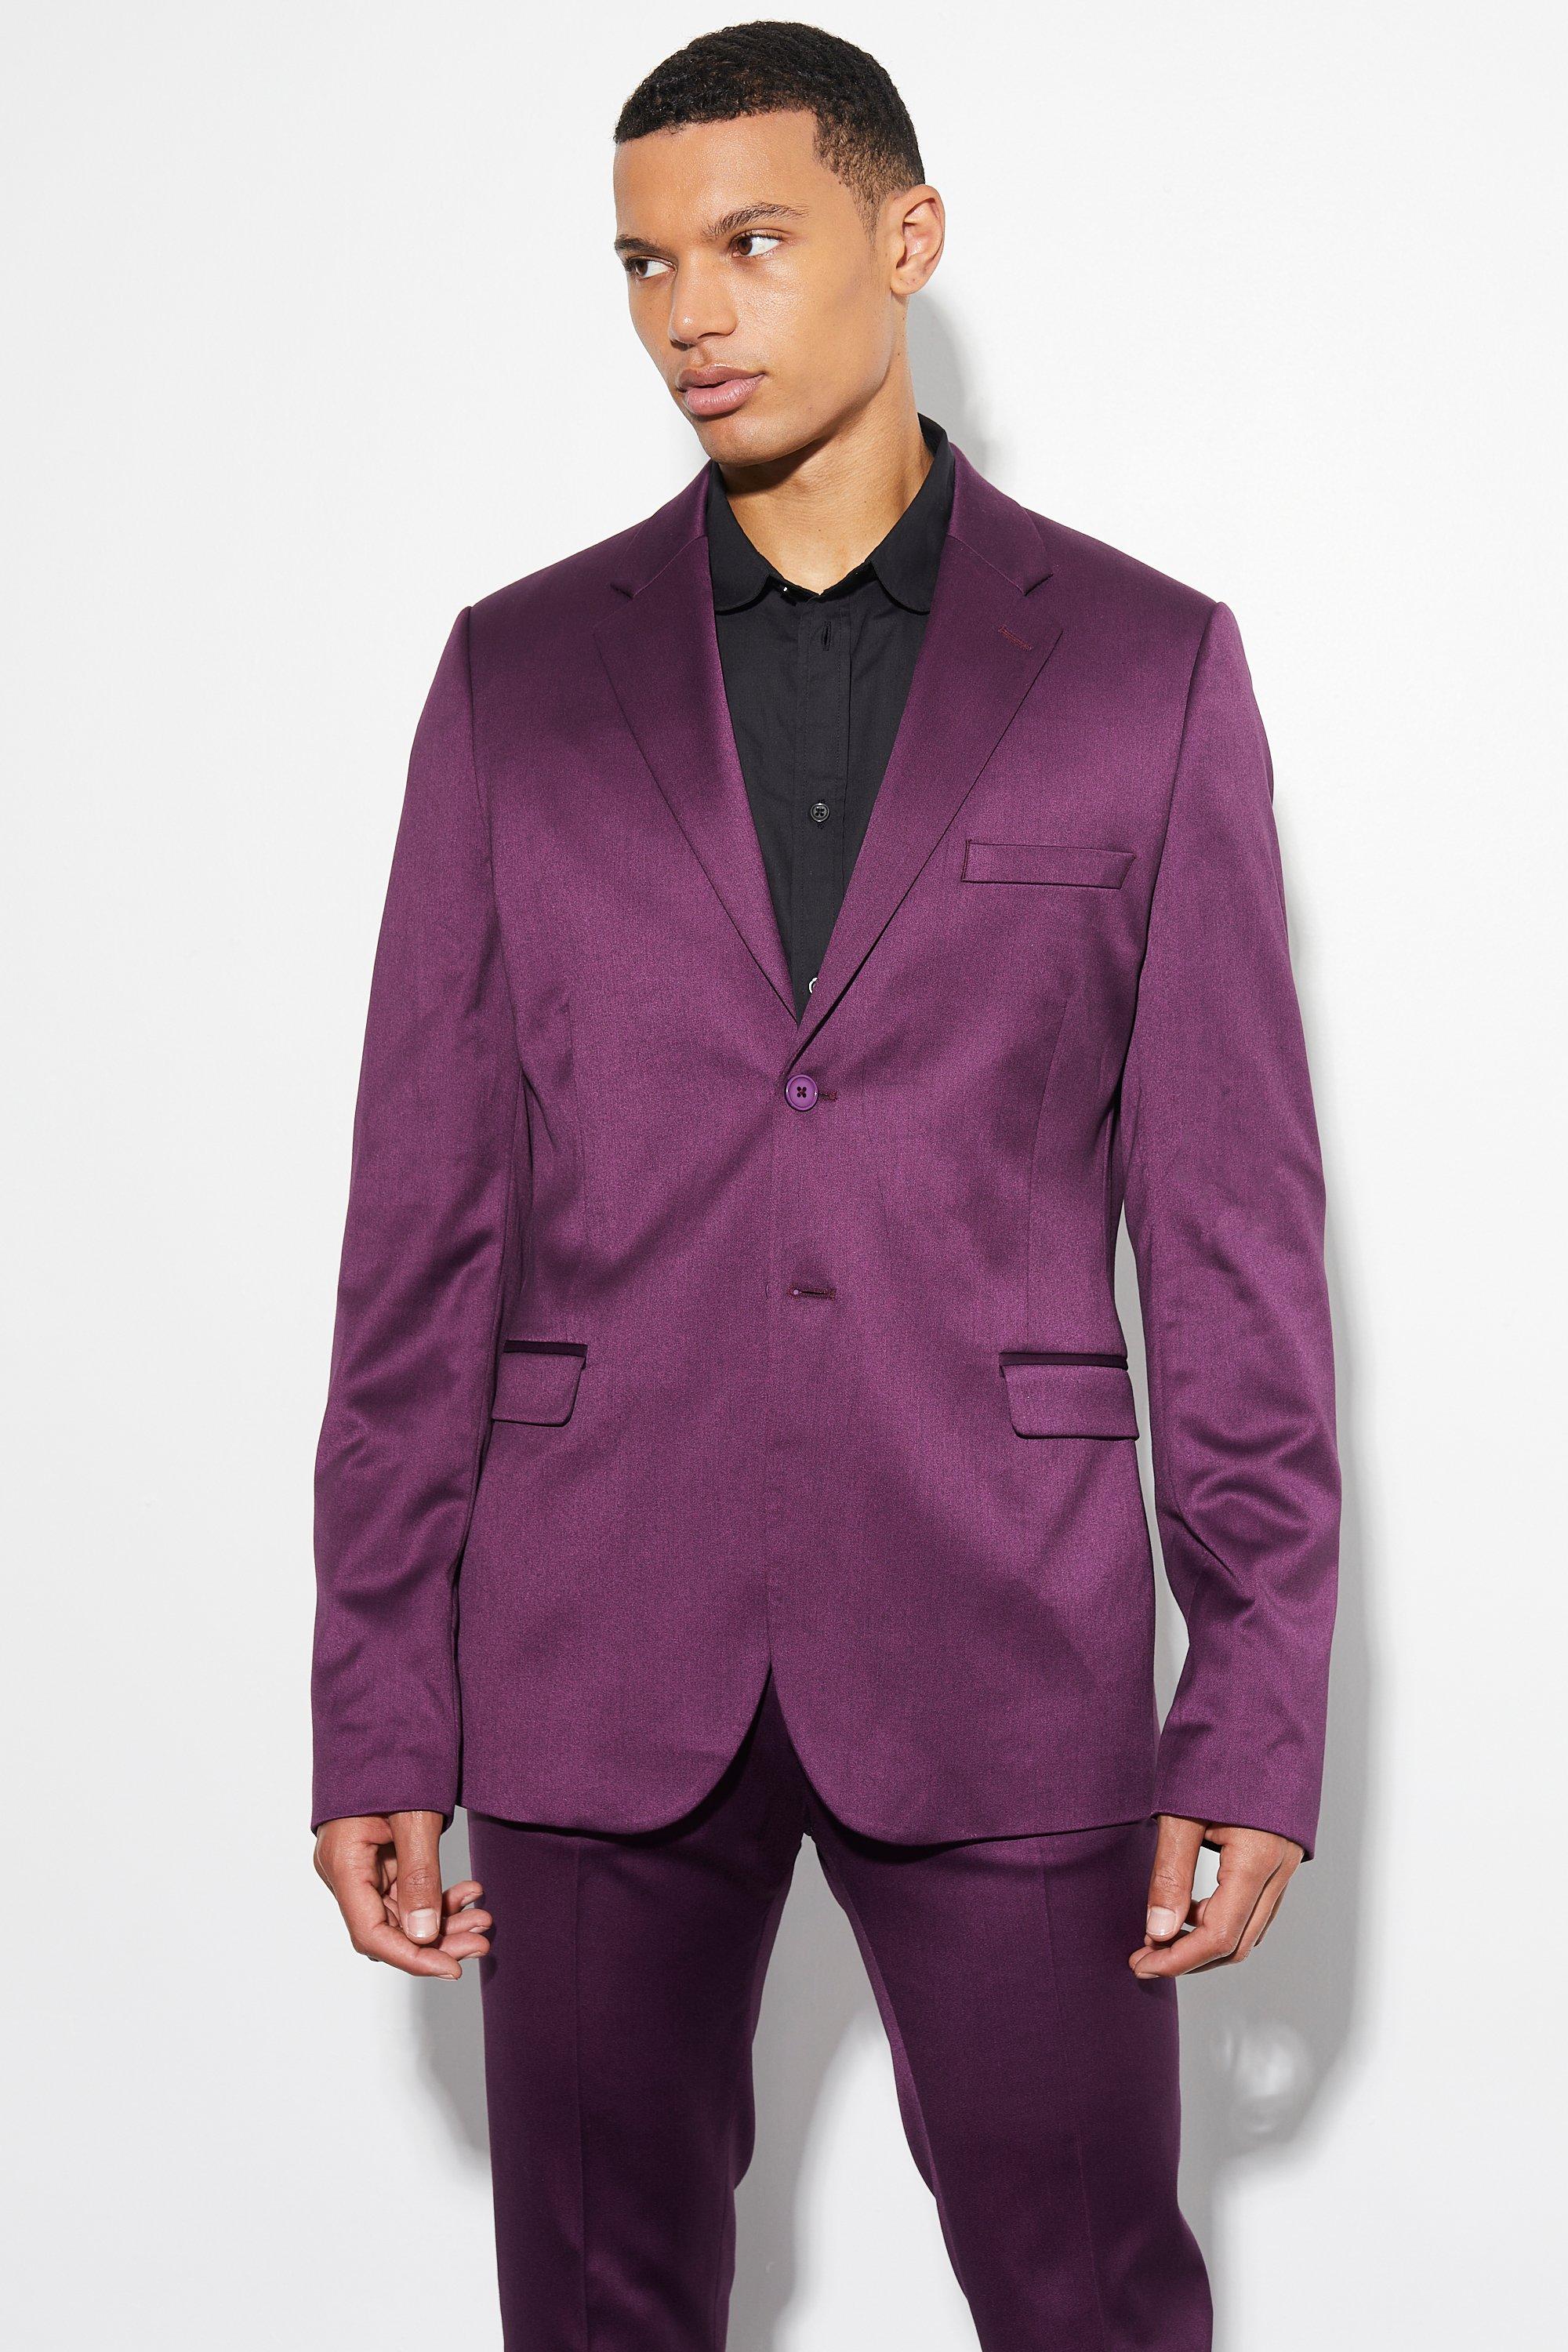 tall - veste de costume cintrée satinée homme - violet - 36, violet